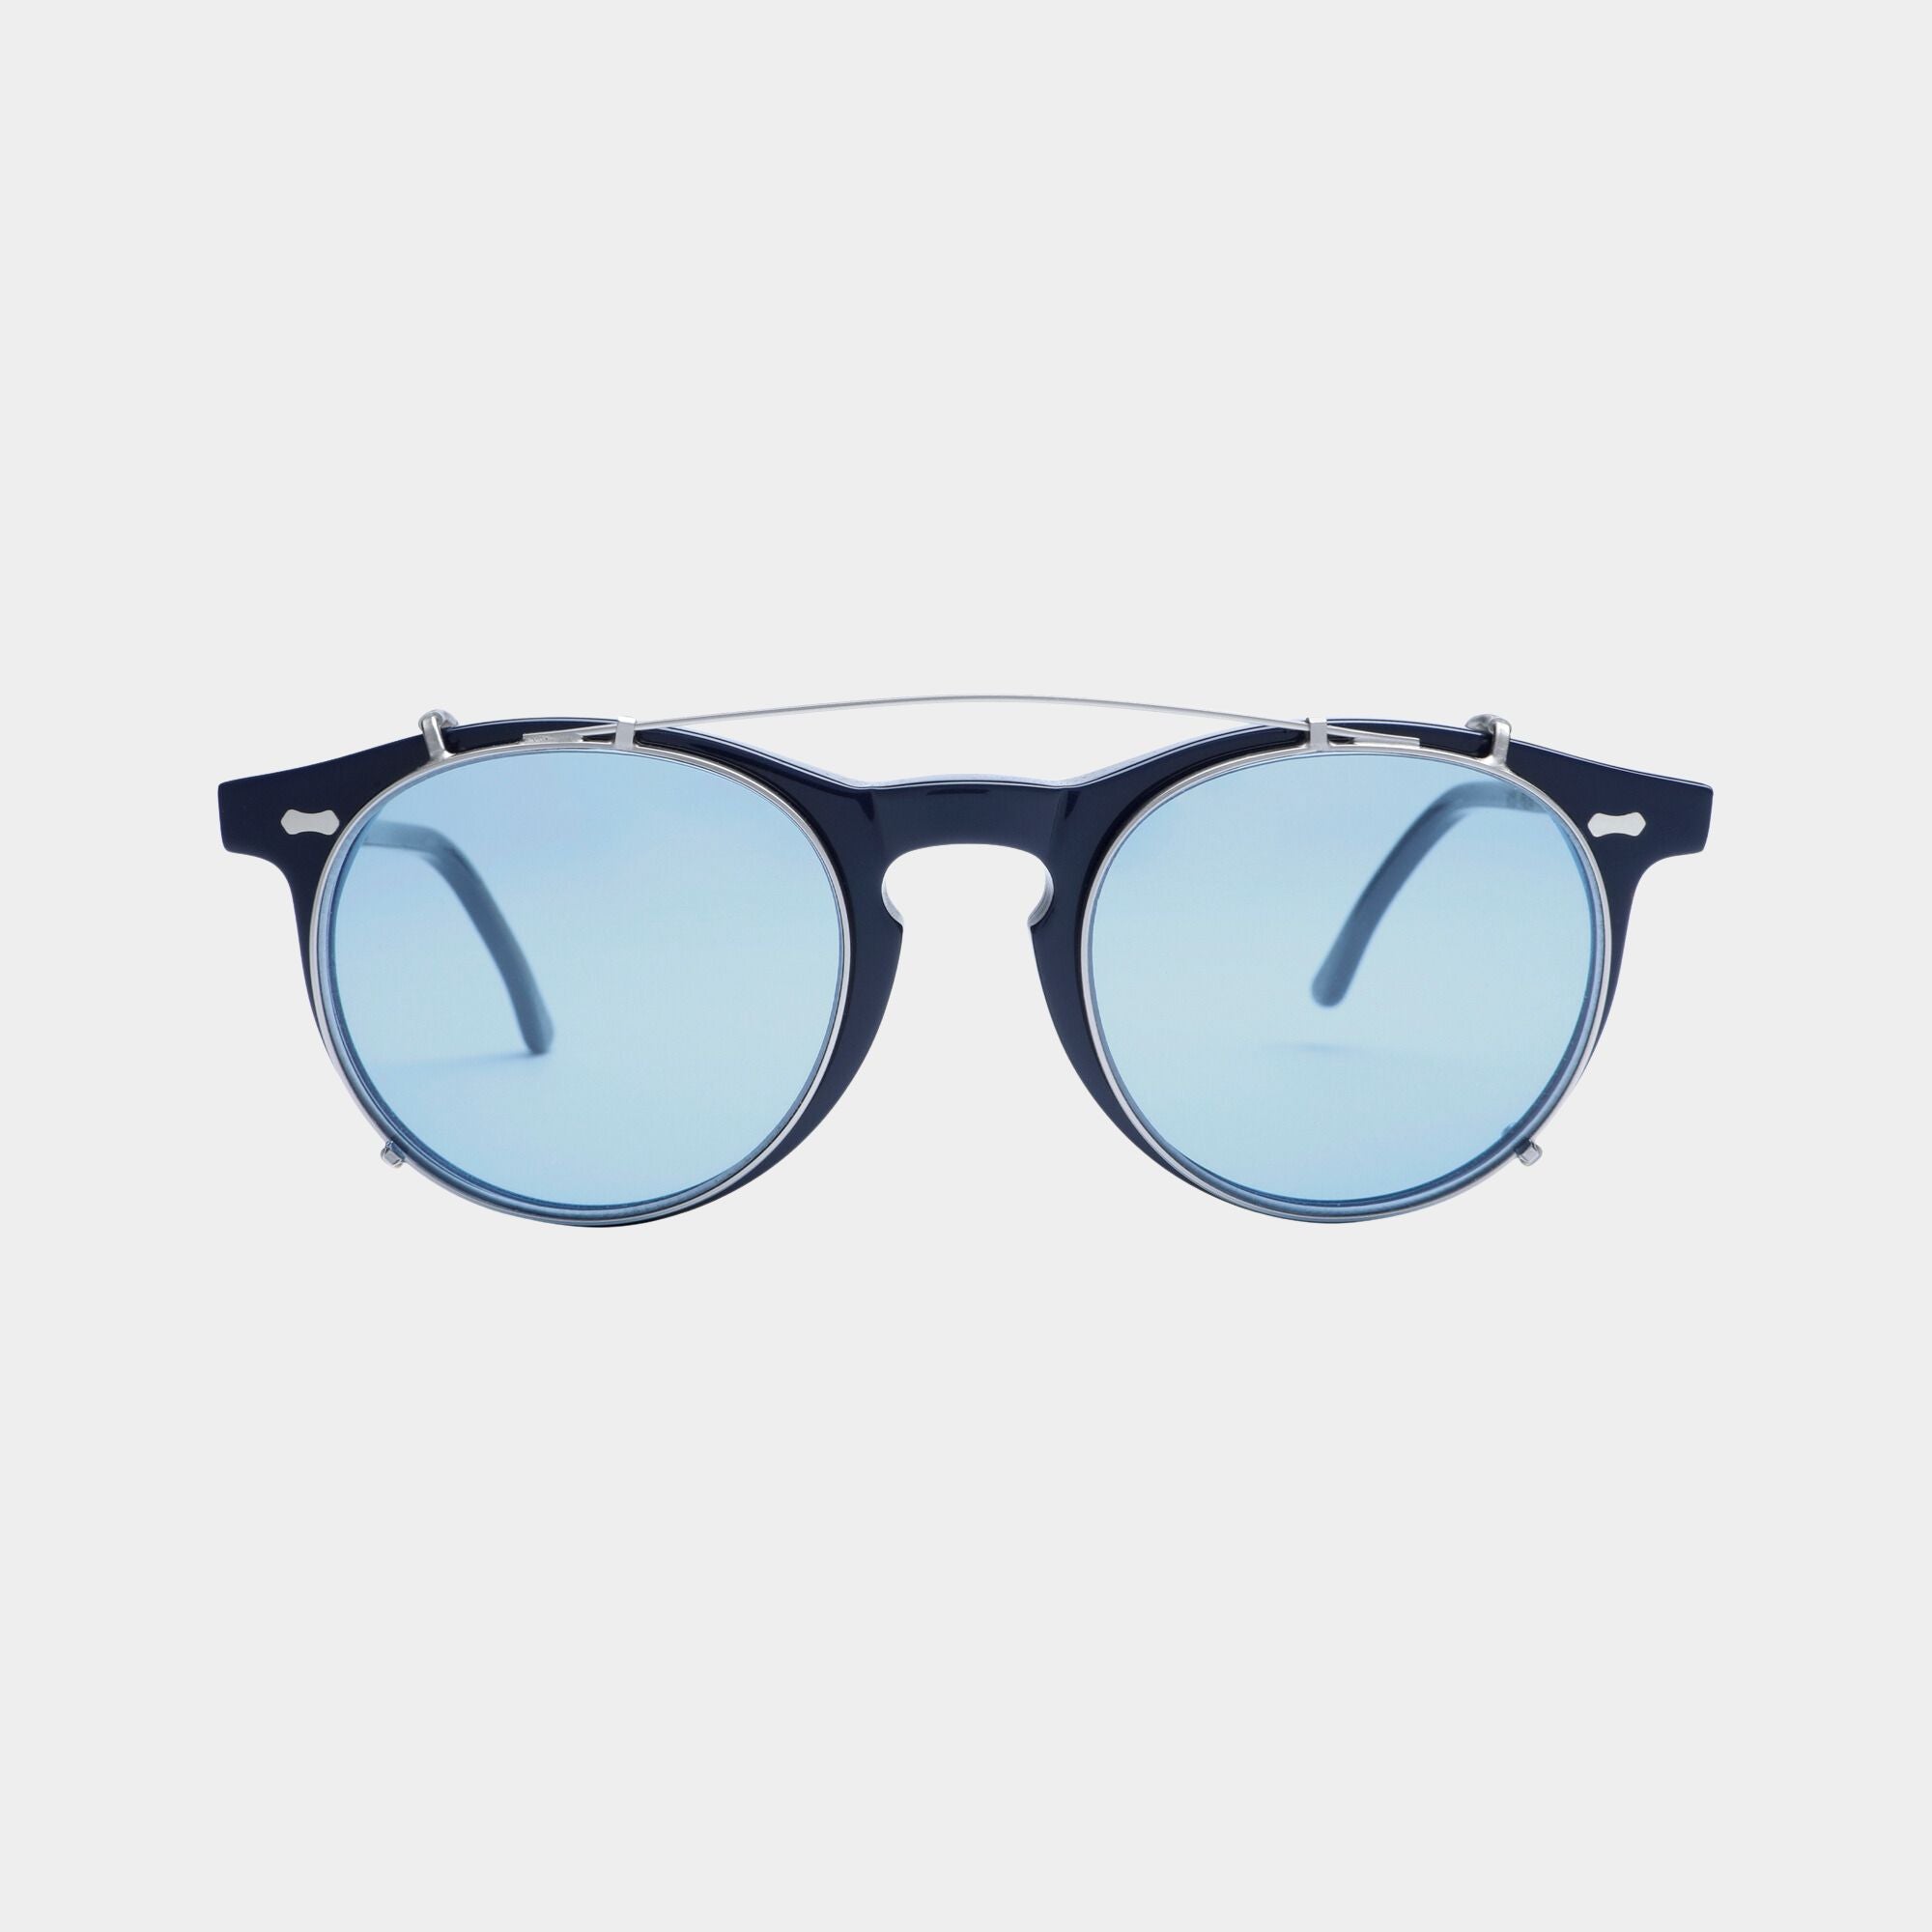 sunglasses-pleat-limited-edition-marinella-tbd-eyewear-front